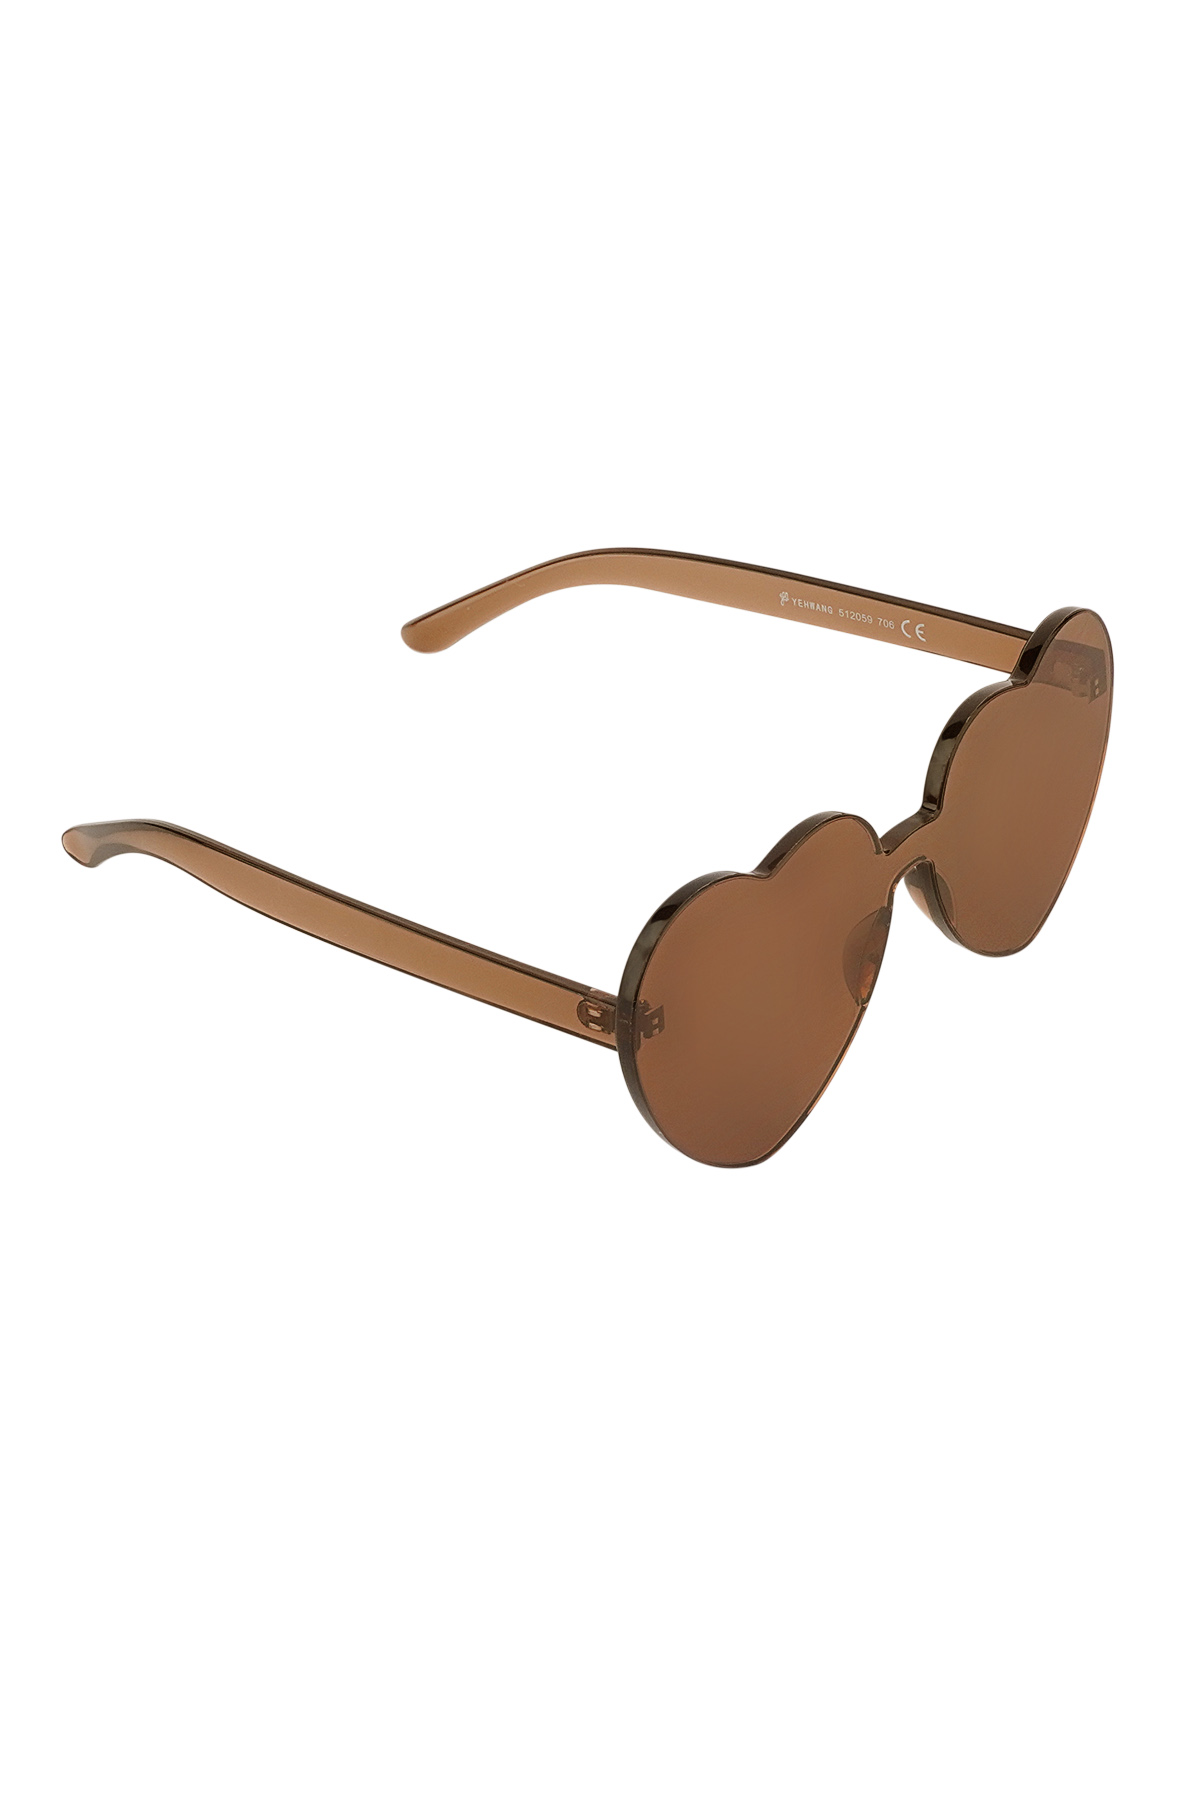 Sunglasses simple heart - brown